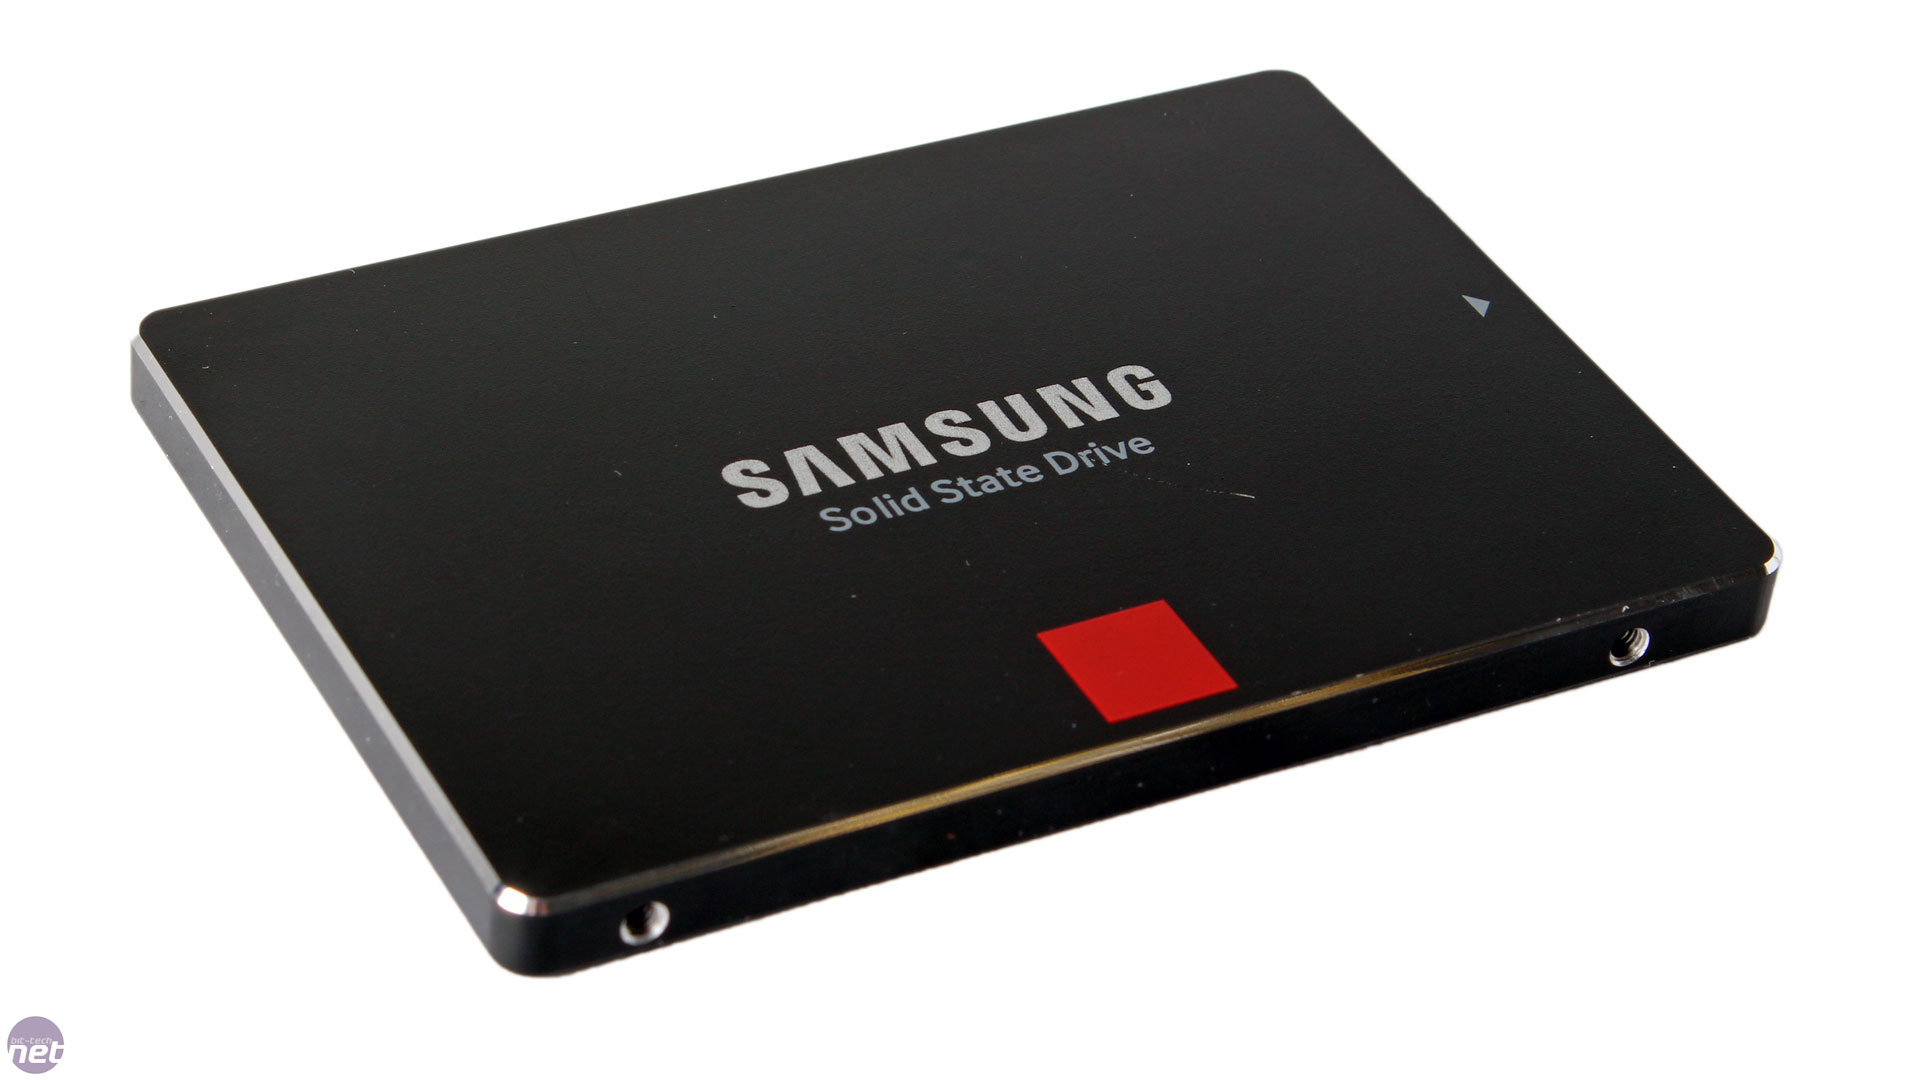 screech Slid Demokrati Samsung SSD 850 PRO 256GB Review | bit-tech.net